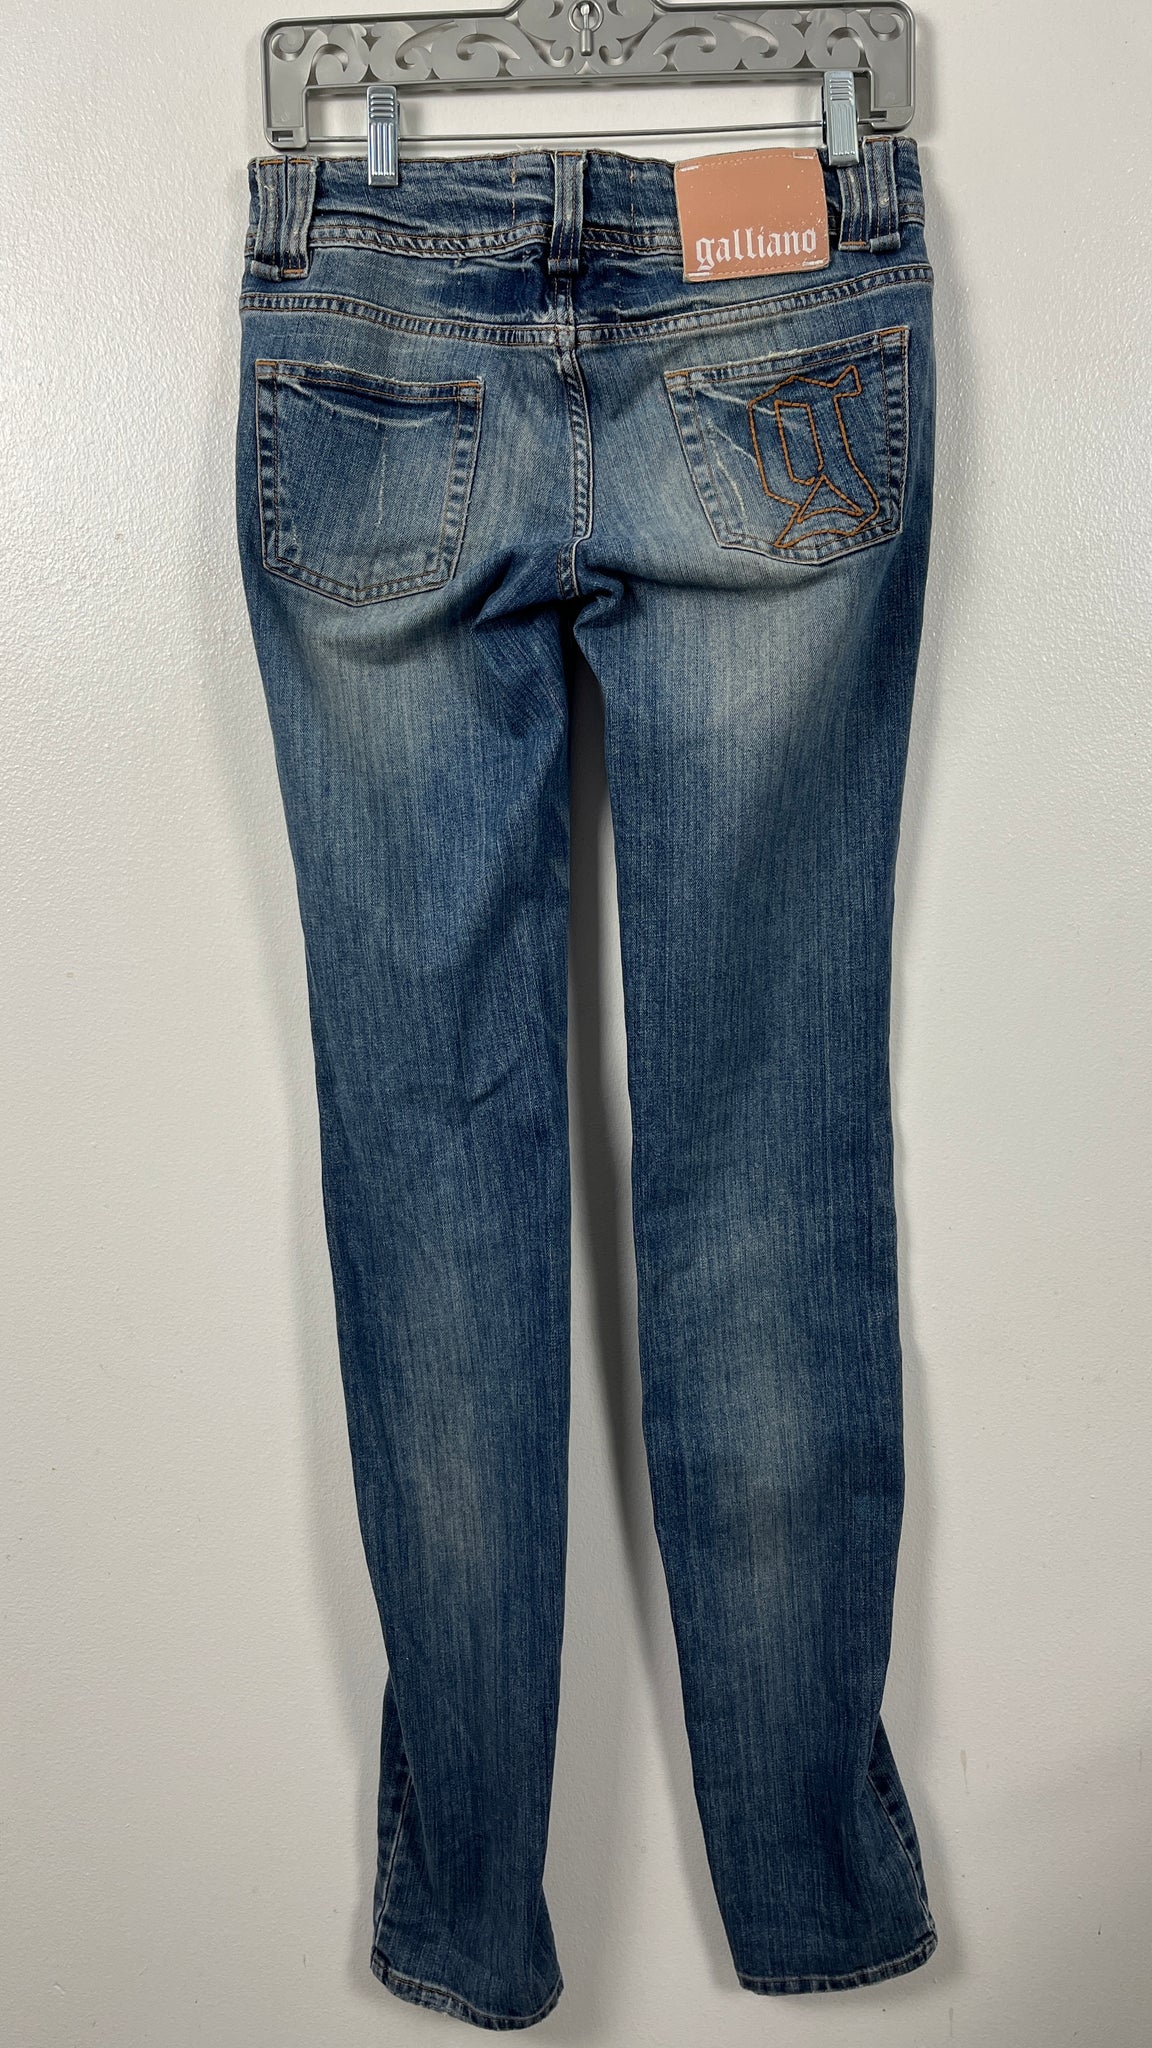 John Galliano Twisted Leg Skinny Jeans